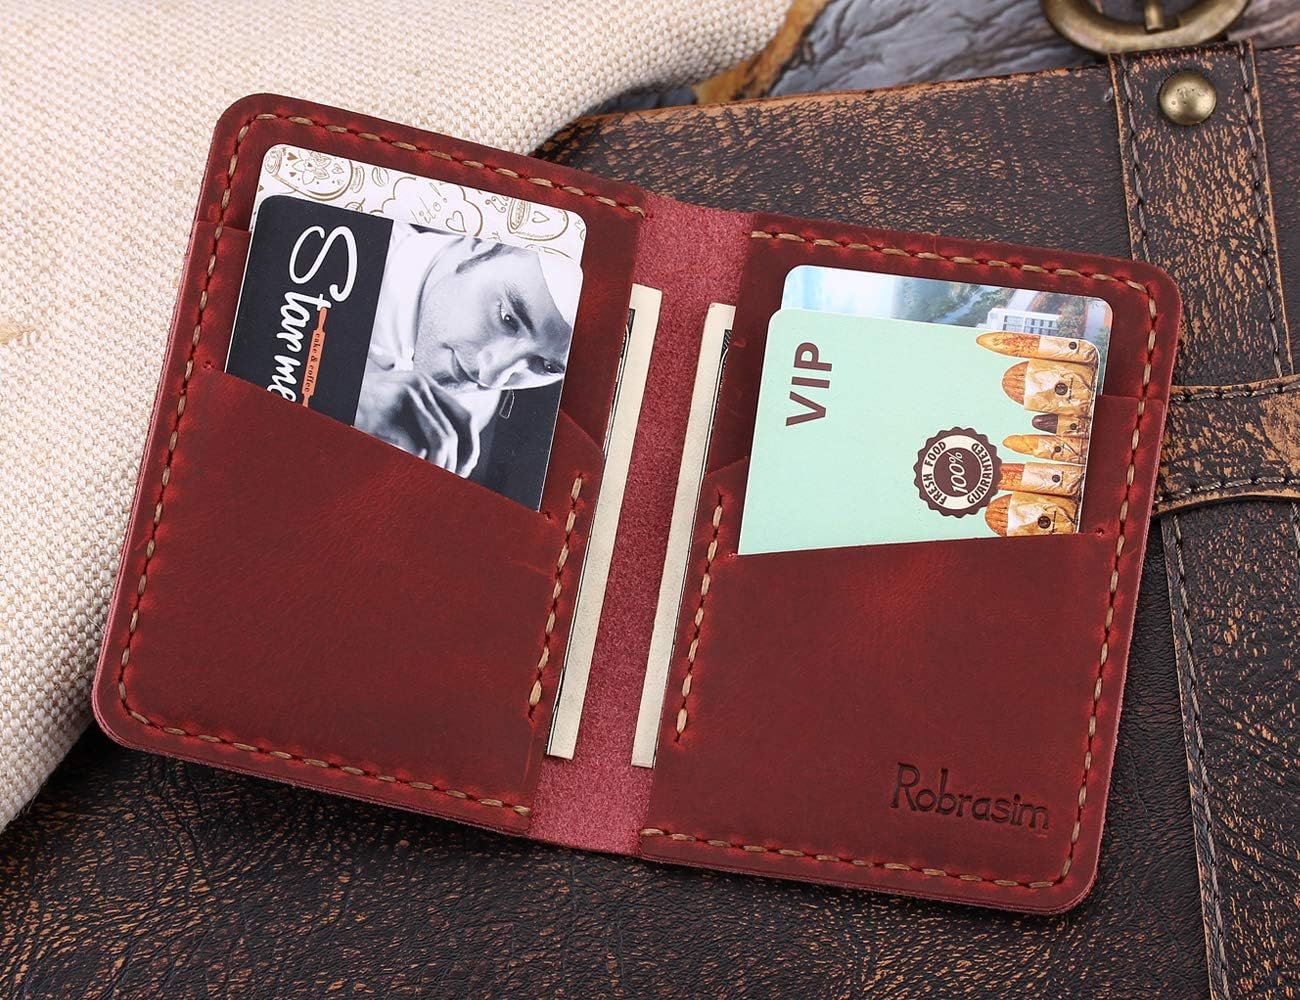 Robrasim Handmade Bifold Leather Wallet Review